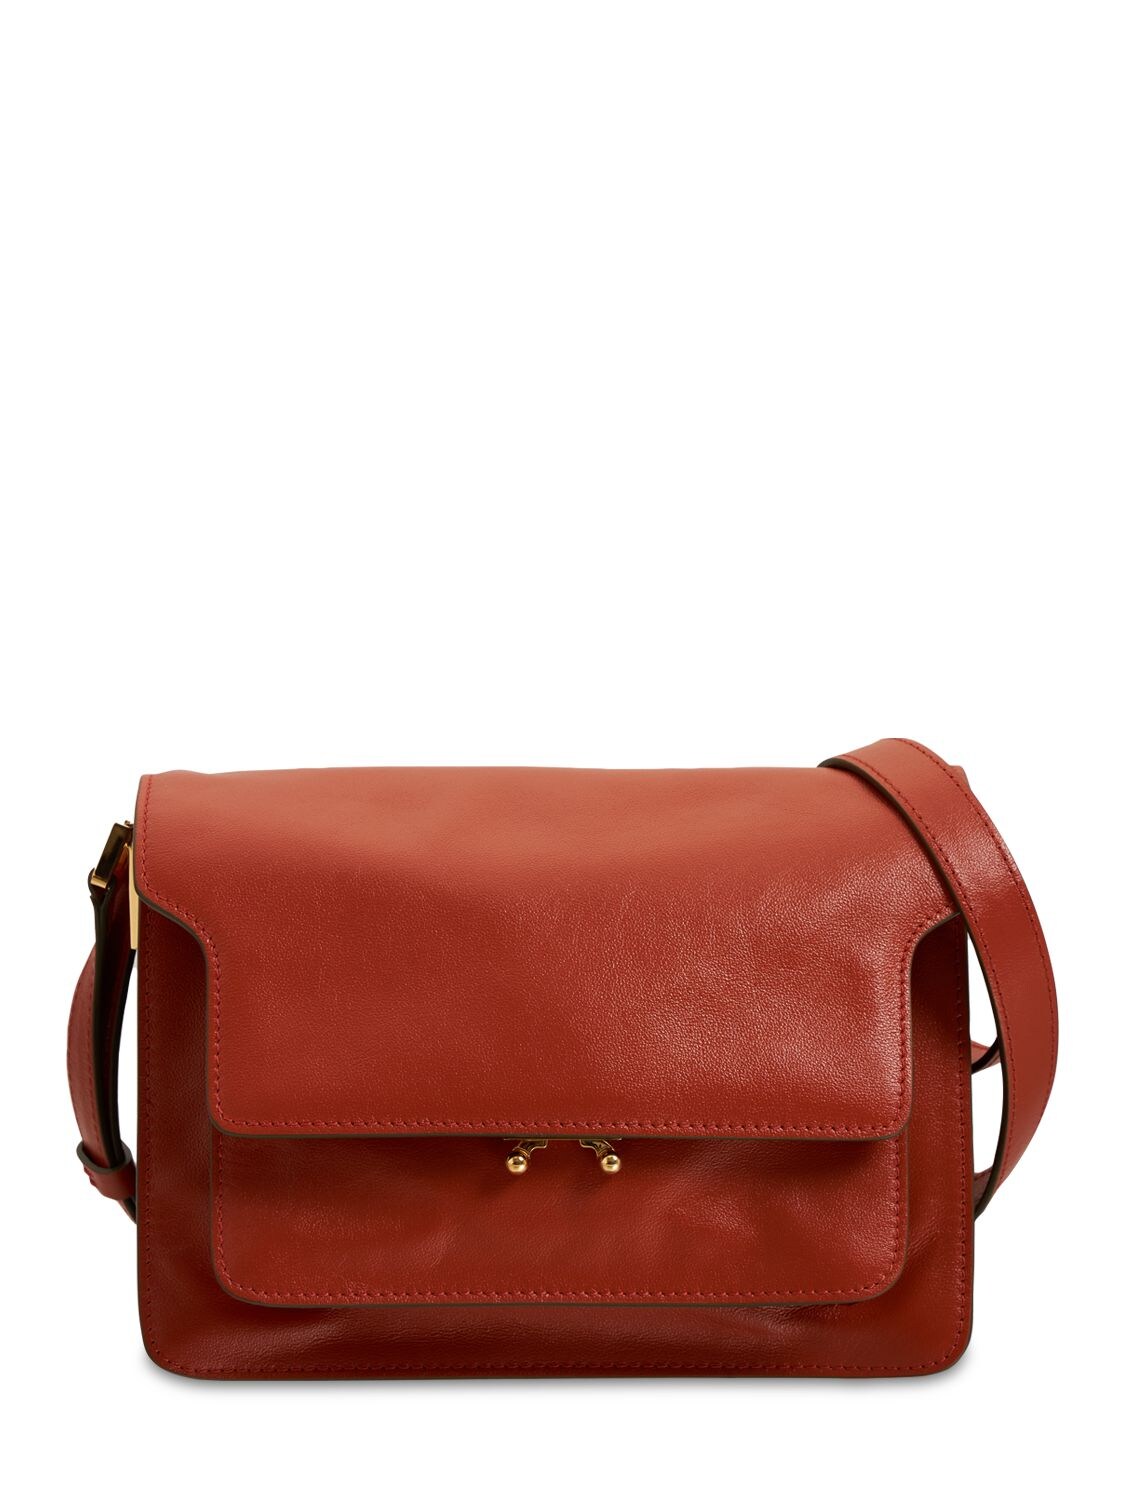 Marni Trunk Patent Soft Mini Bag - Brown Mini Bags, Handbags